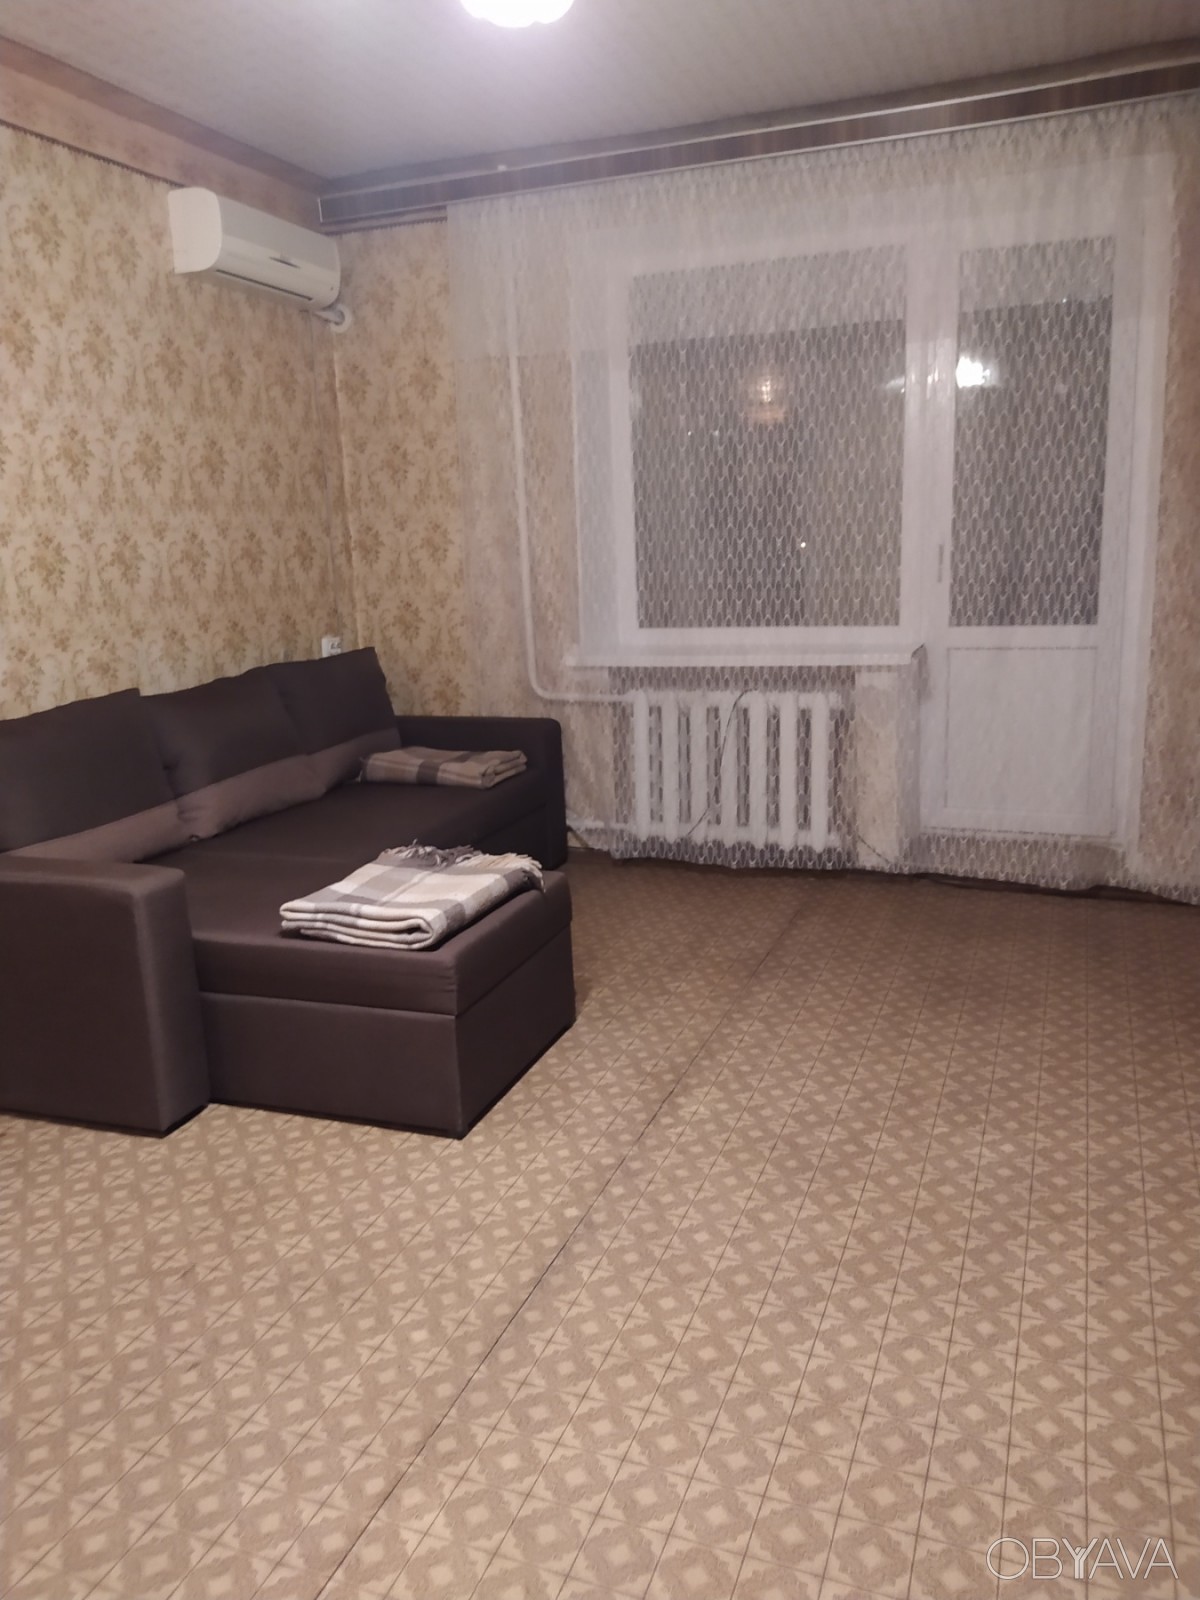 Сниму 1 комнатную квартиру без мебели и без посредников